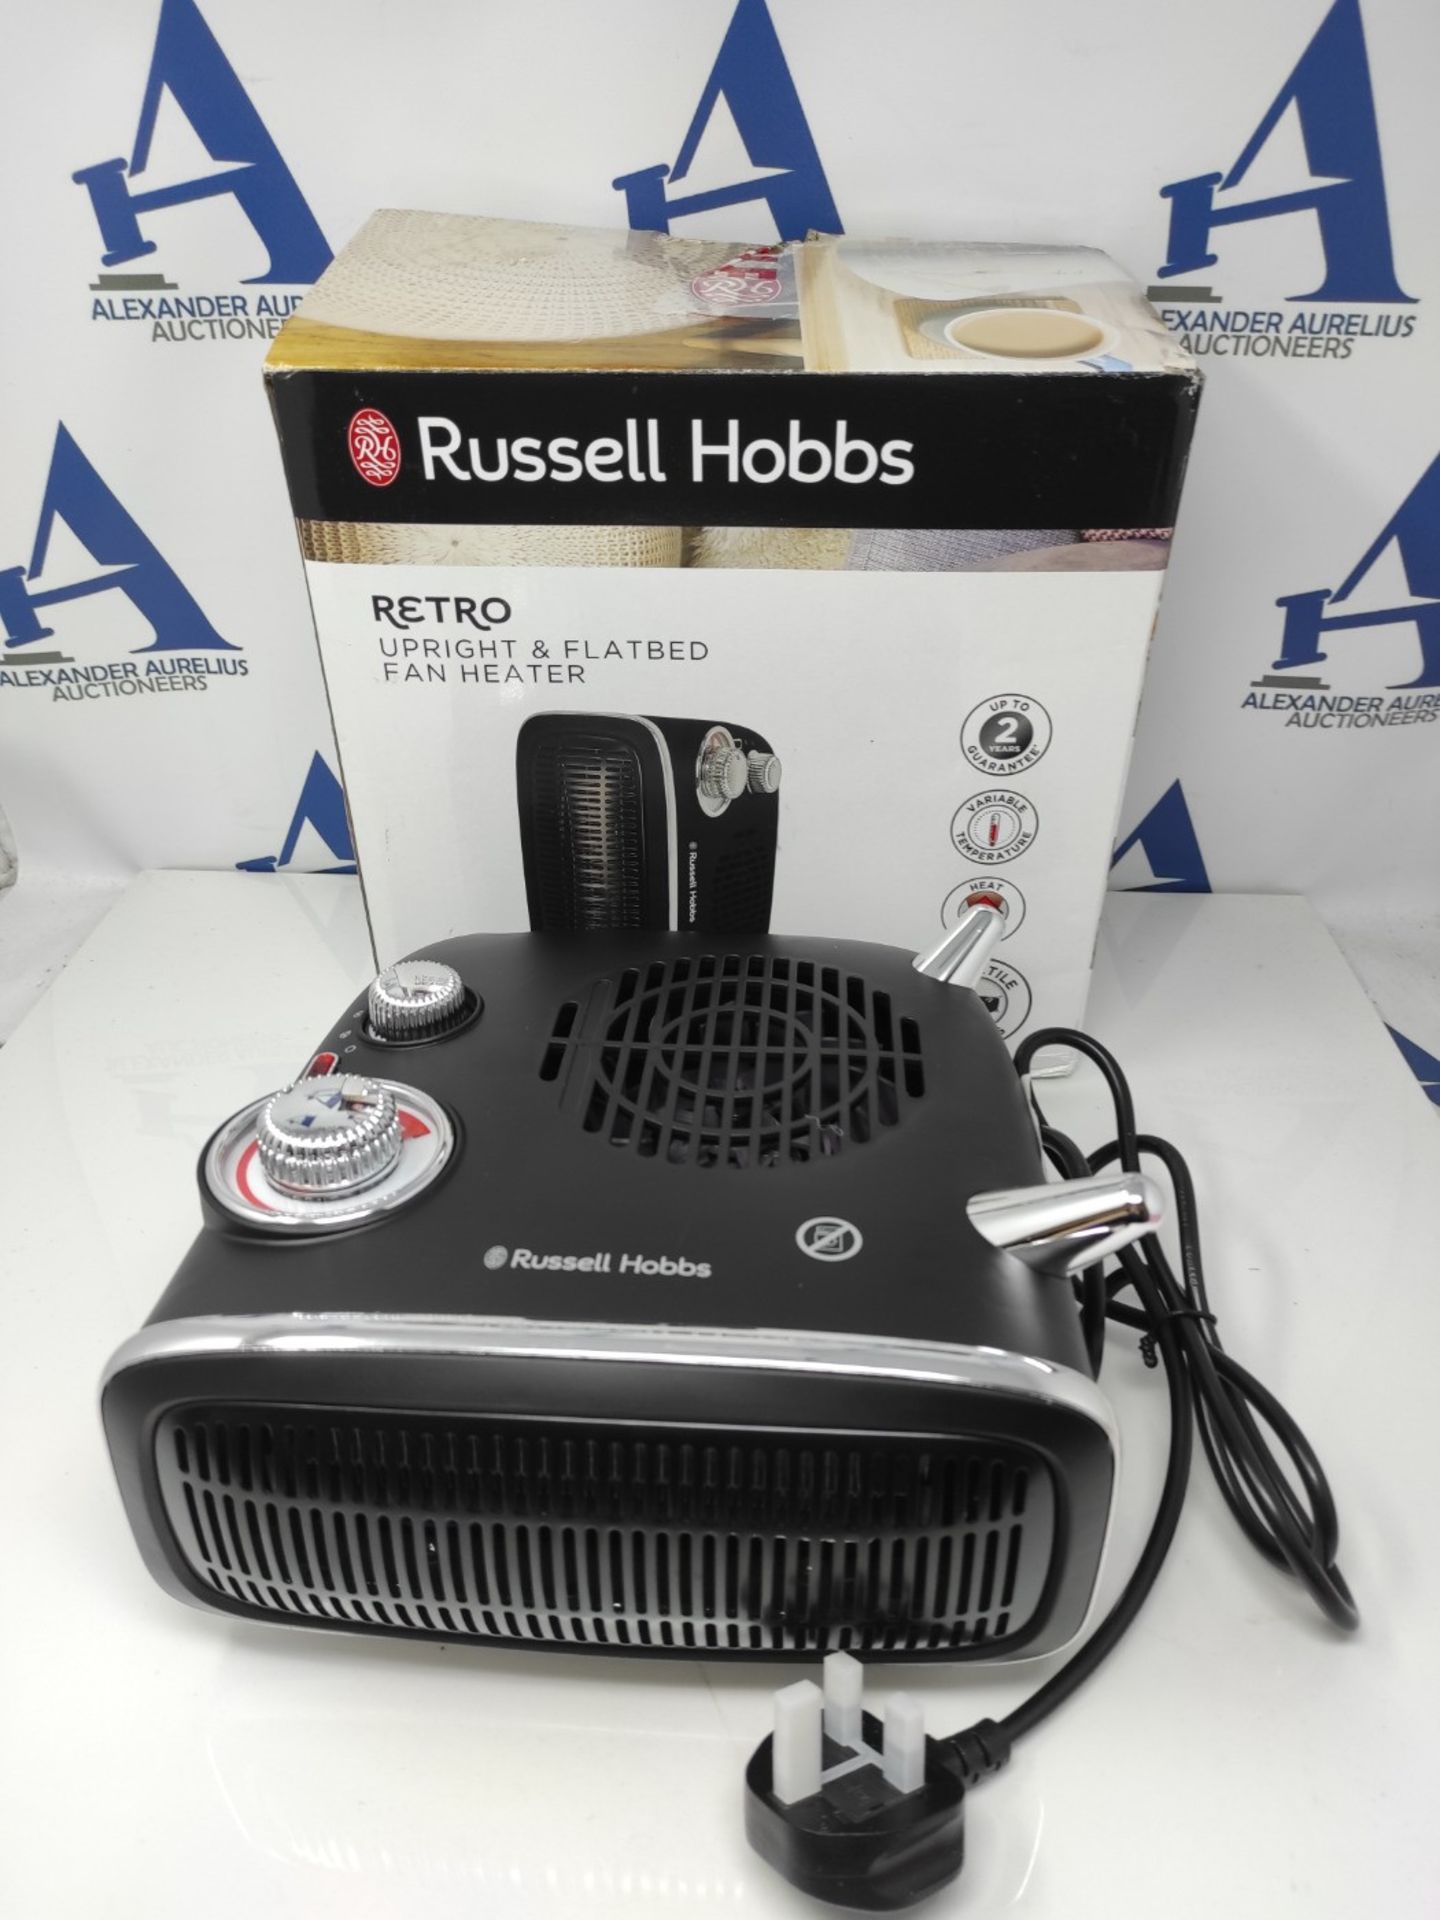 Russell Hobbs 1800W/1.8KW Electric Heater, Retro Horizontal/Vertical Fan Heater in Bla - Image 2 of 2